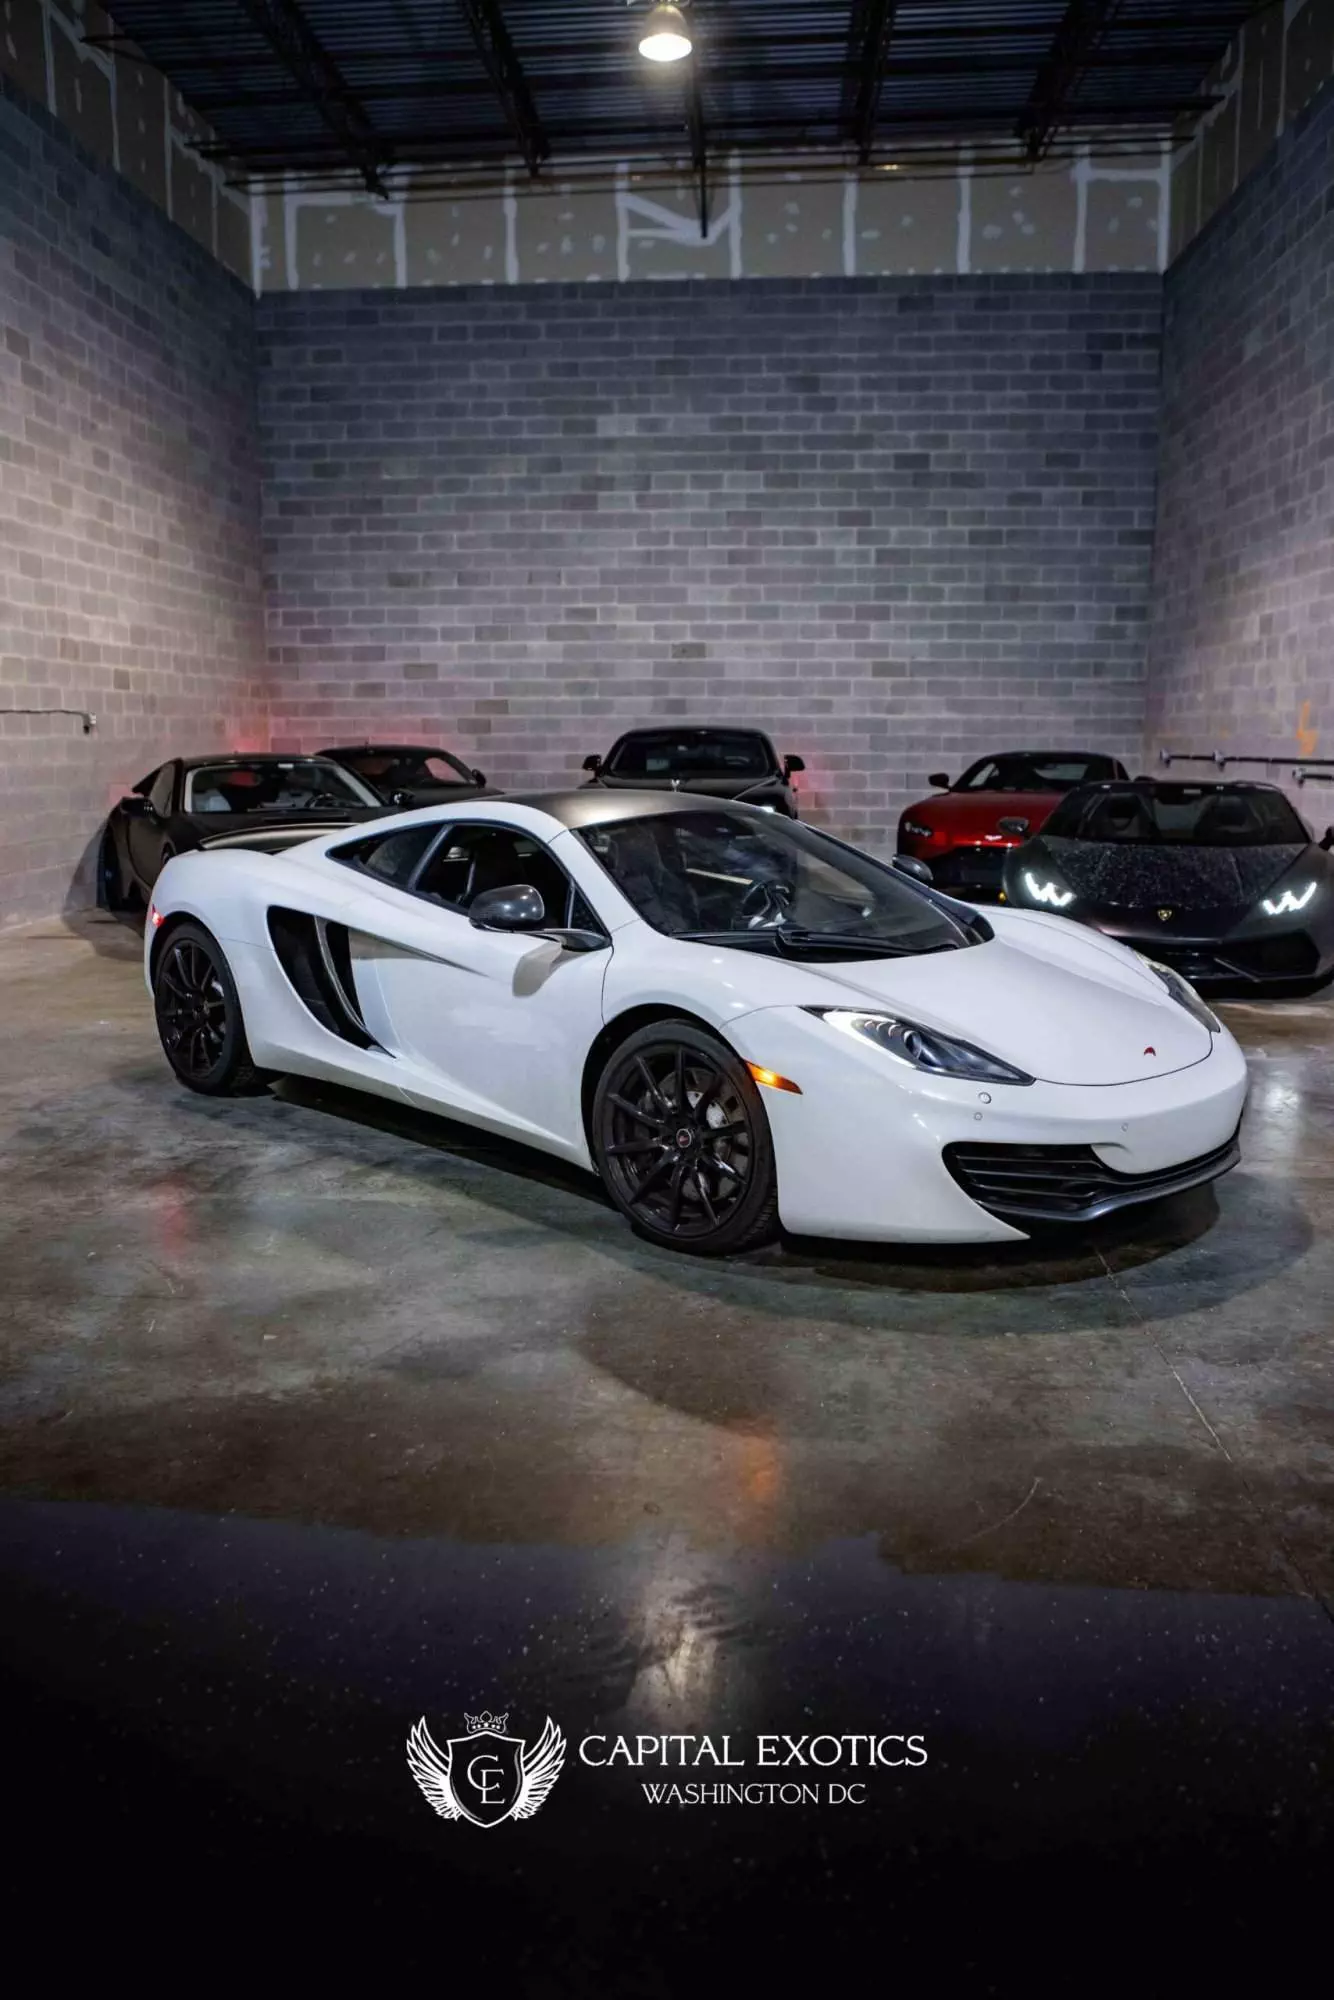 McLaren 12C - Super Car for rent at Capital Exotic Car Rental in Washington DC, Maryland and Virginia